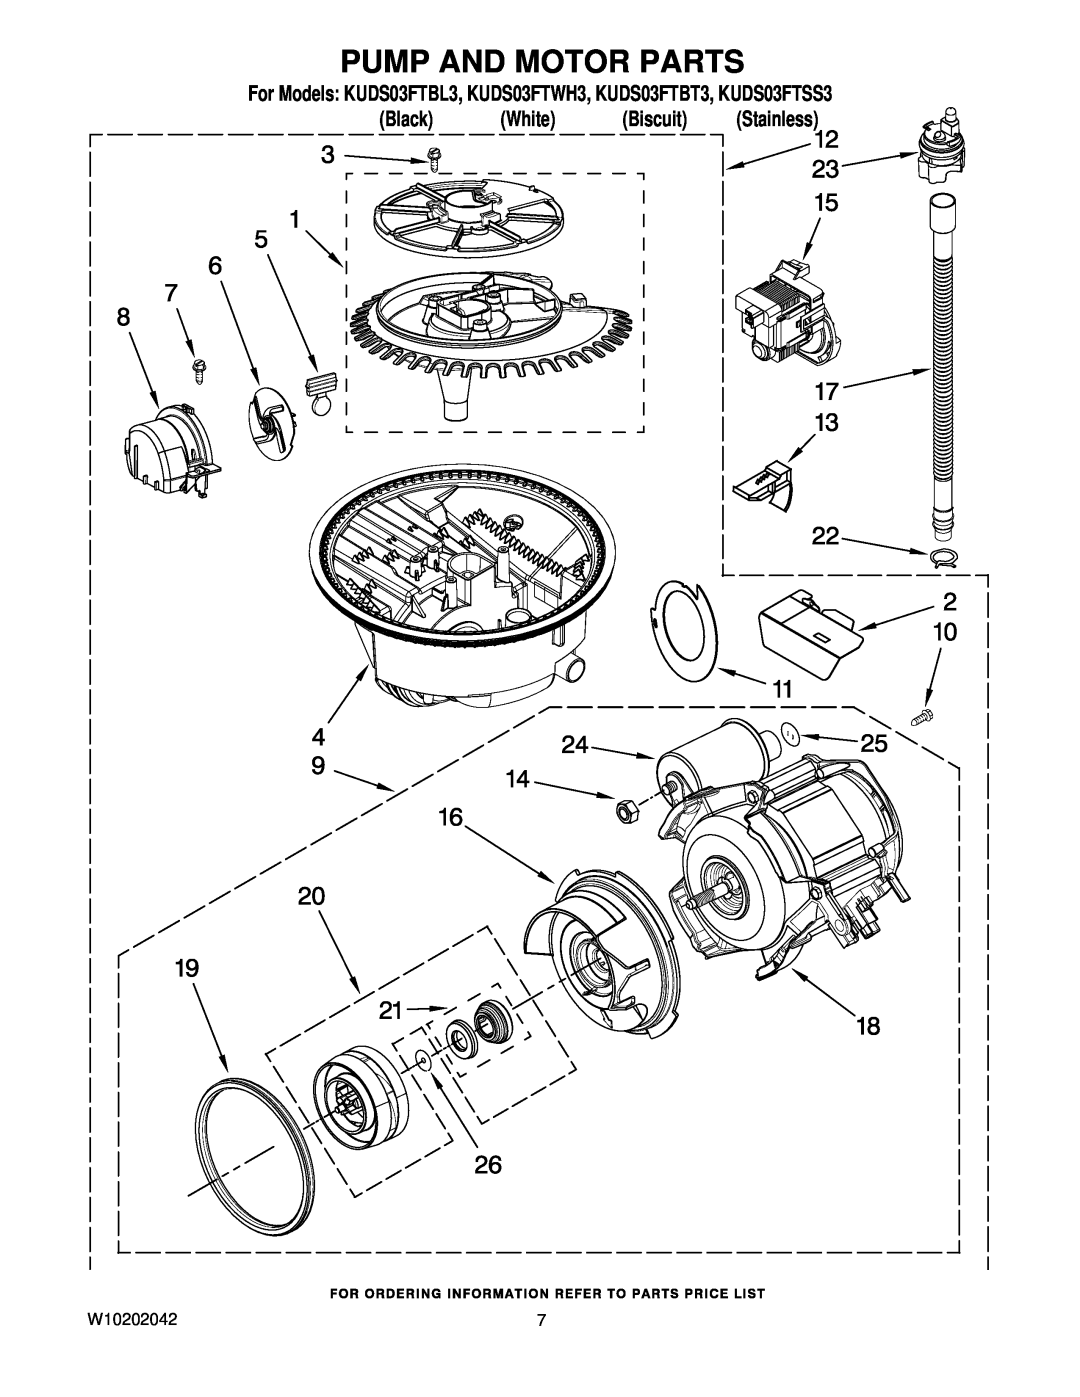 KitchenAid manual Pump And Motor Parts, For Models KUDS03FTBL3, KUDS03FTWH3, KUDS03FTBT3, KUDS03FTSS3 